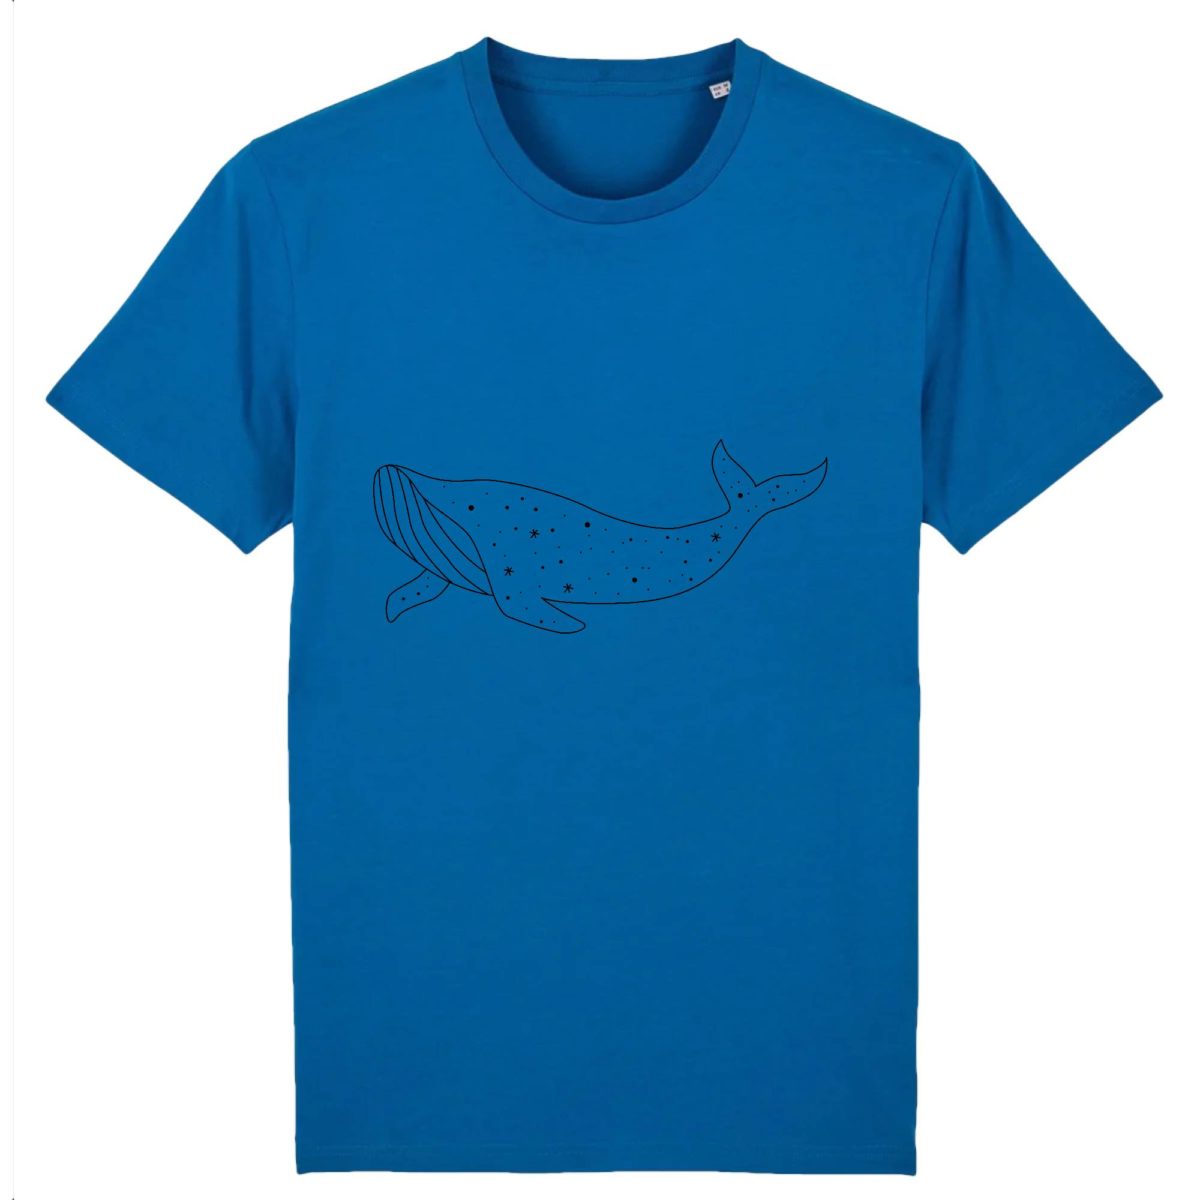 La baleine T-shirt Unisexe - Coton BIO